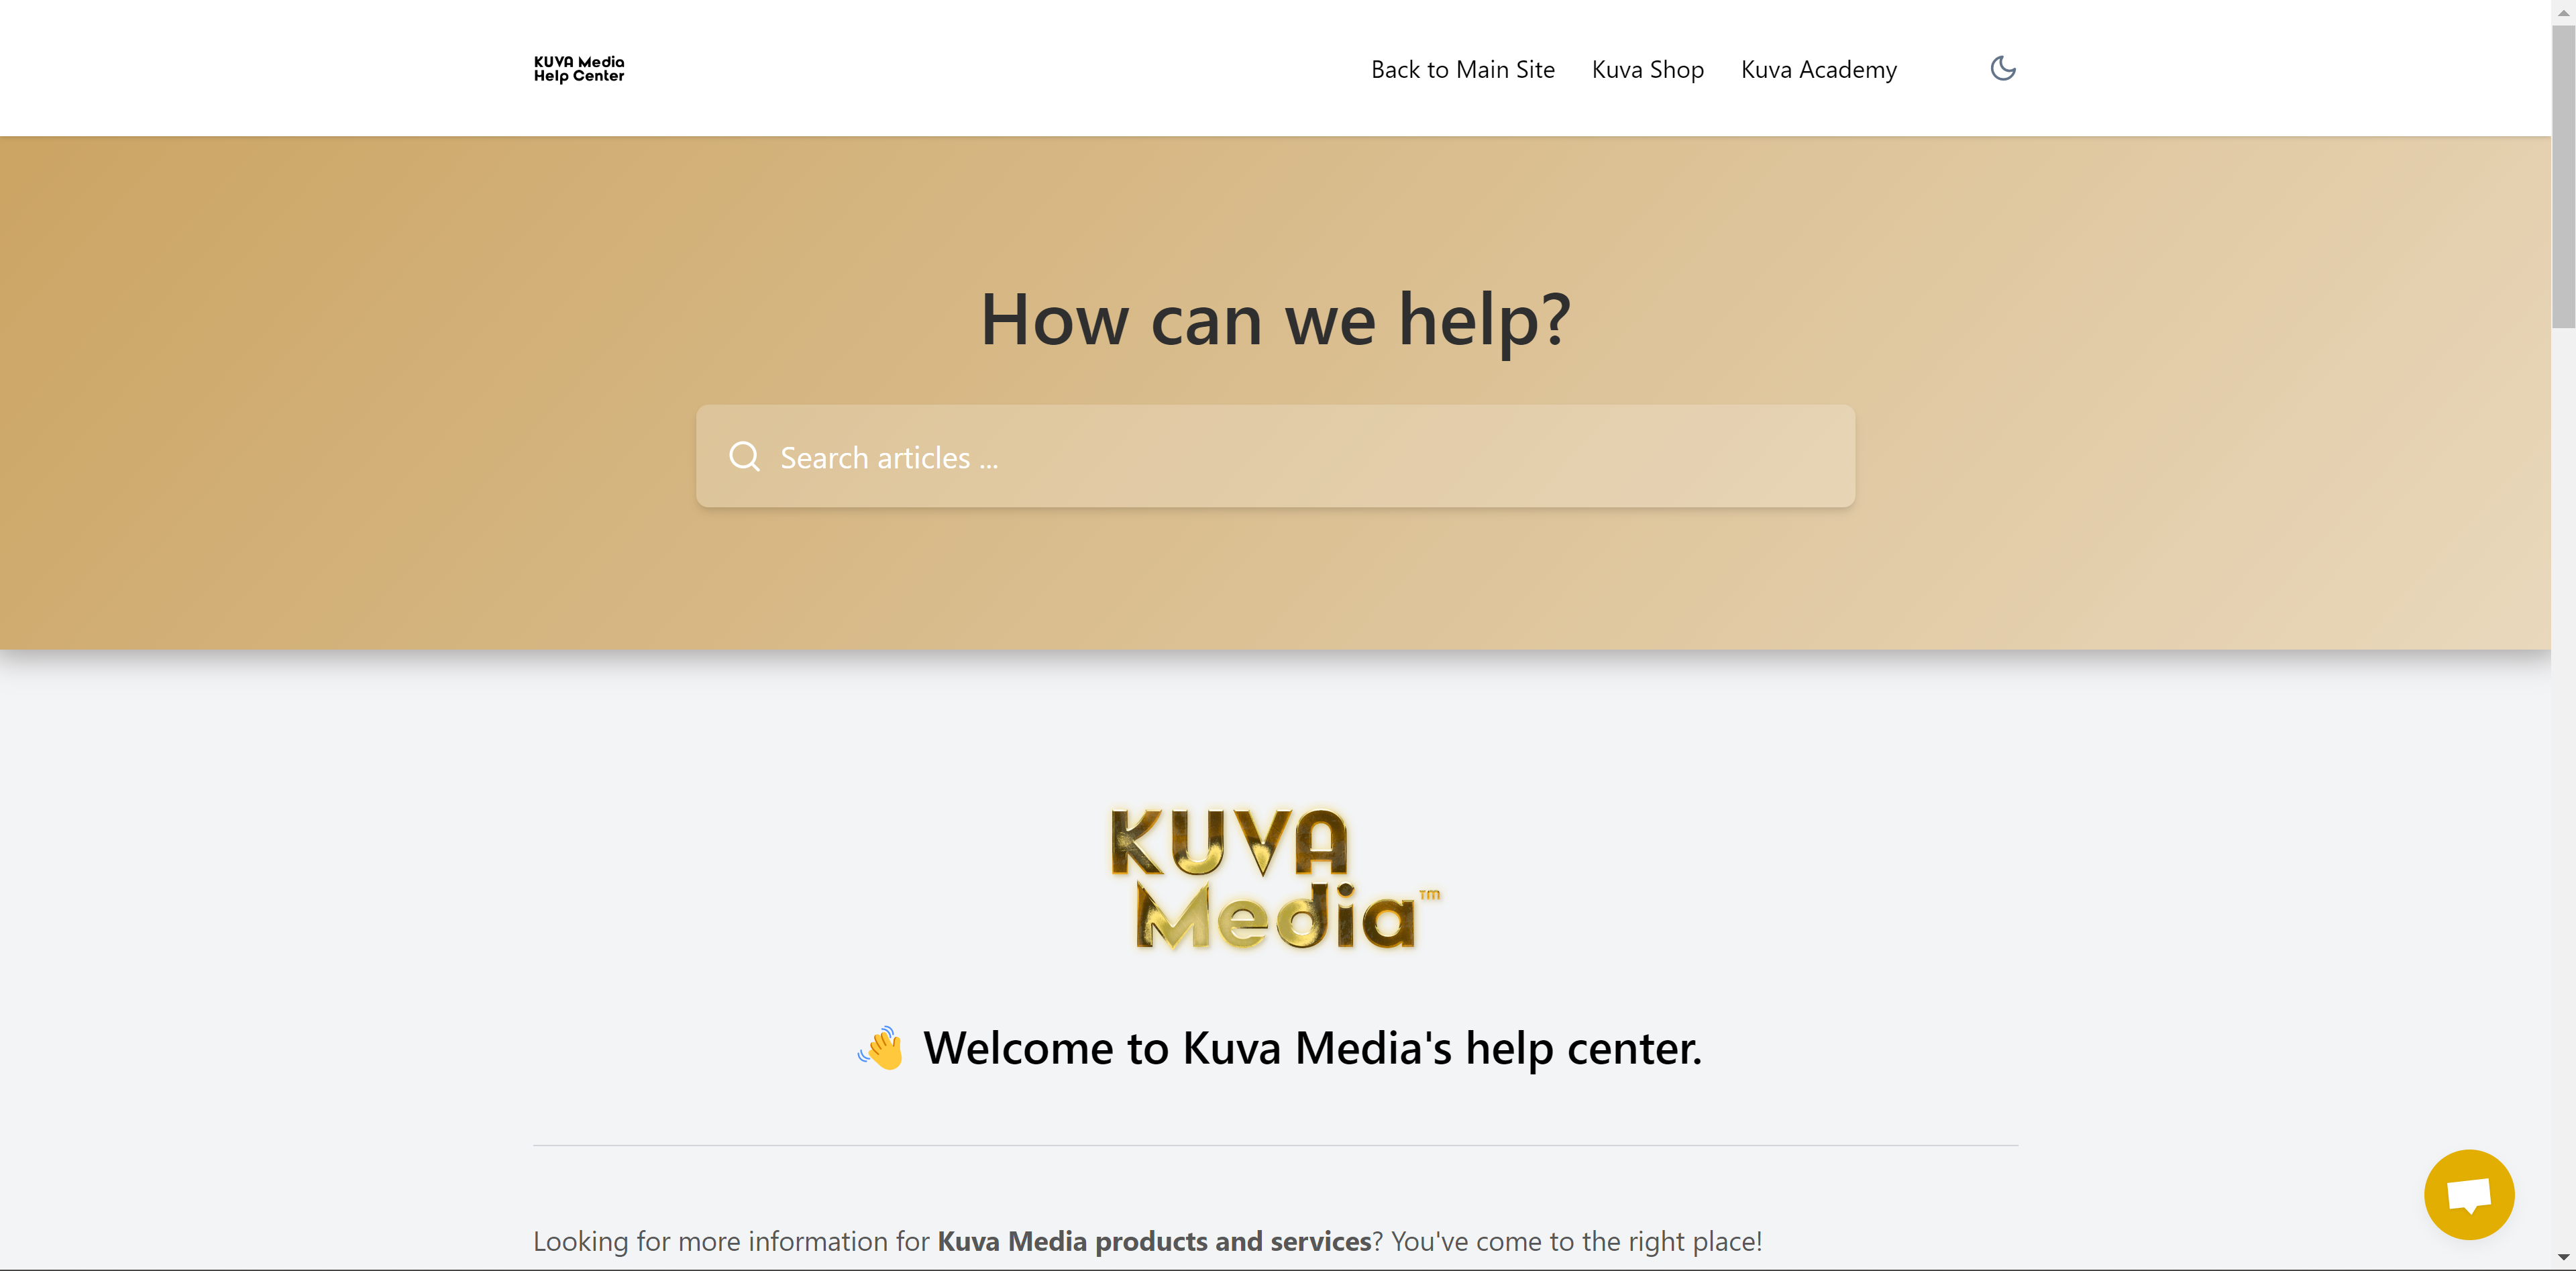 Kuva Media's Help Center